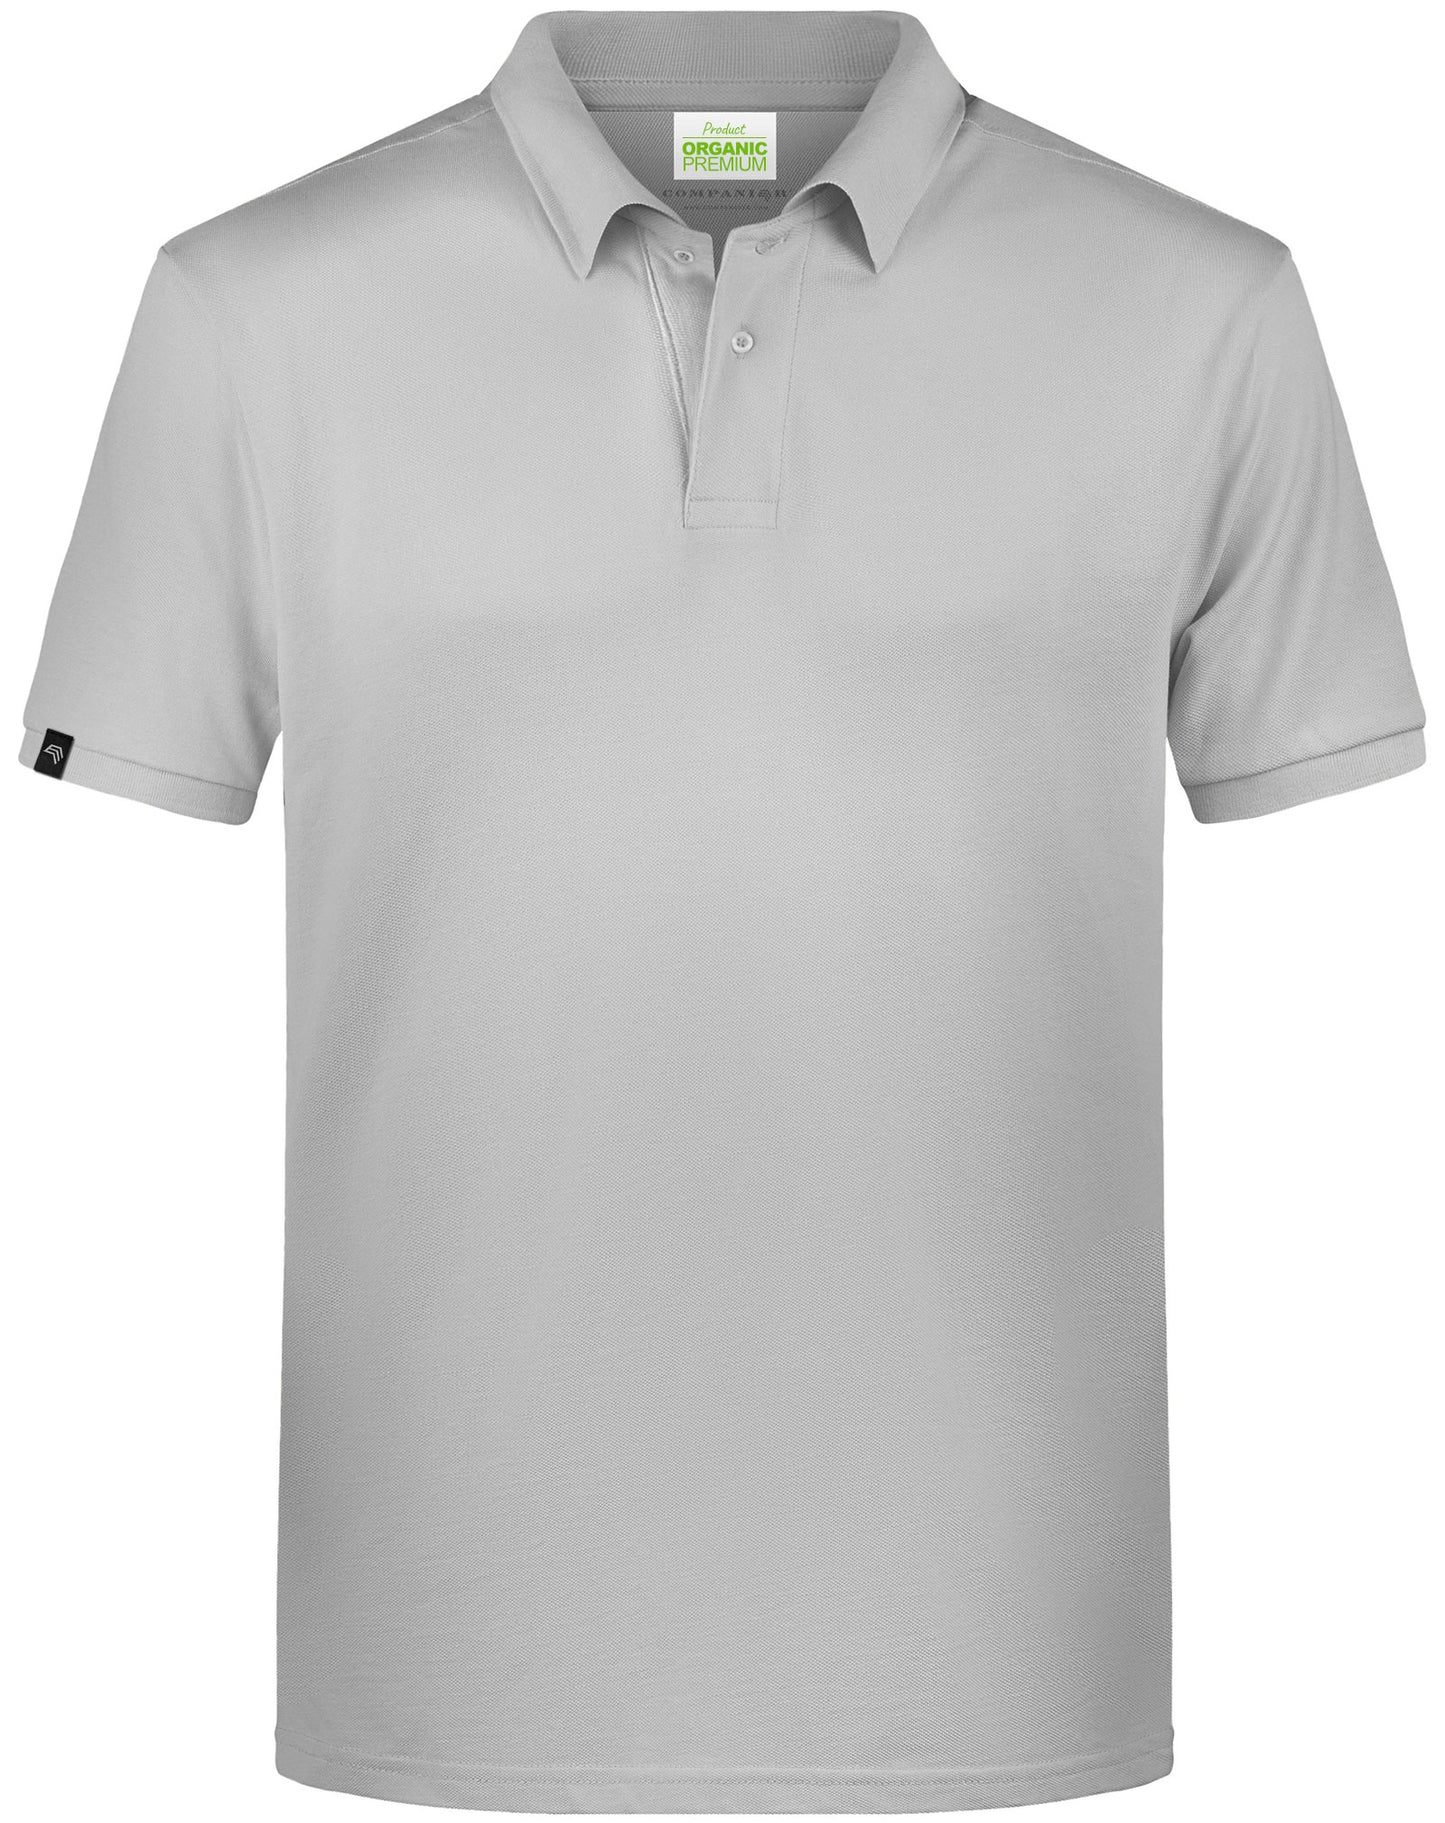 JAN 8010 ― Herren Bio-Baumwolle Polo Shirt - Soft Grau